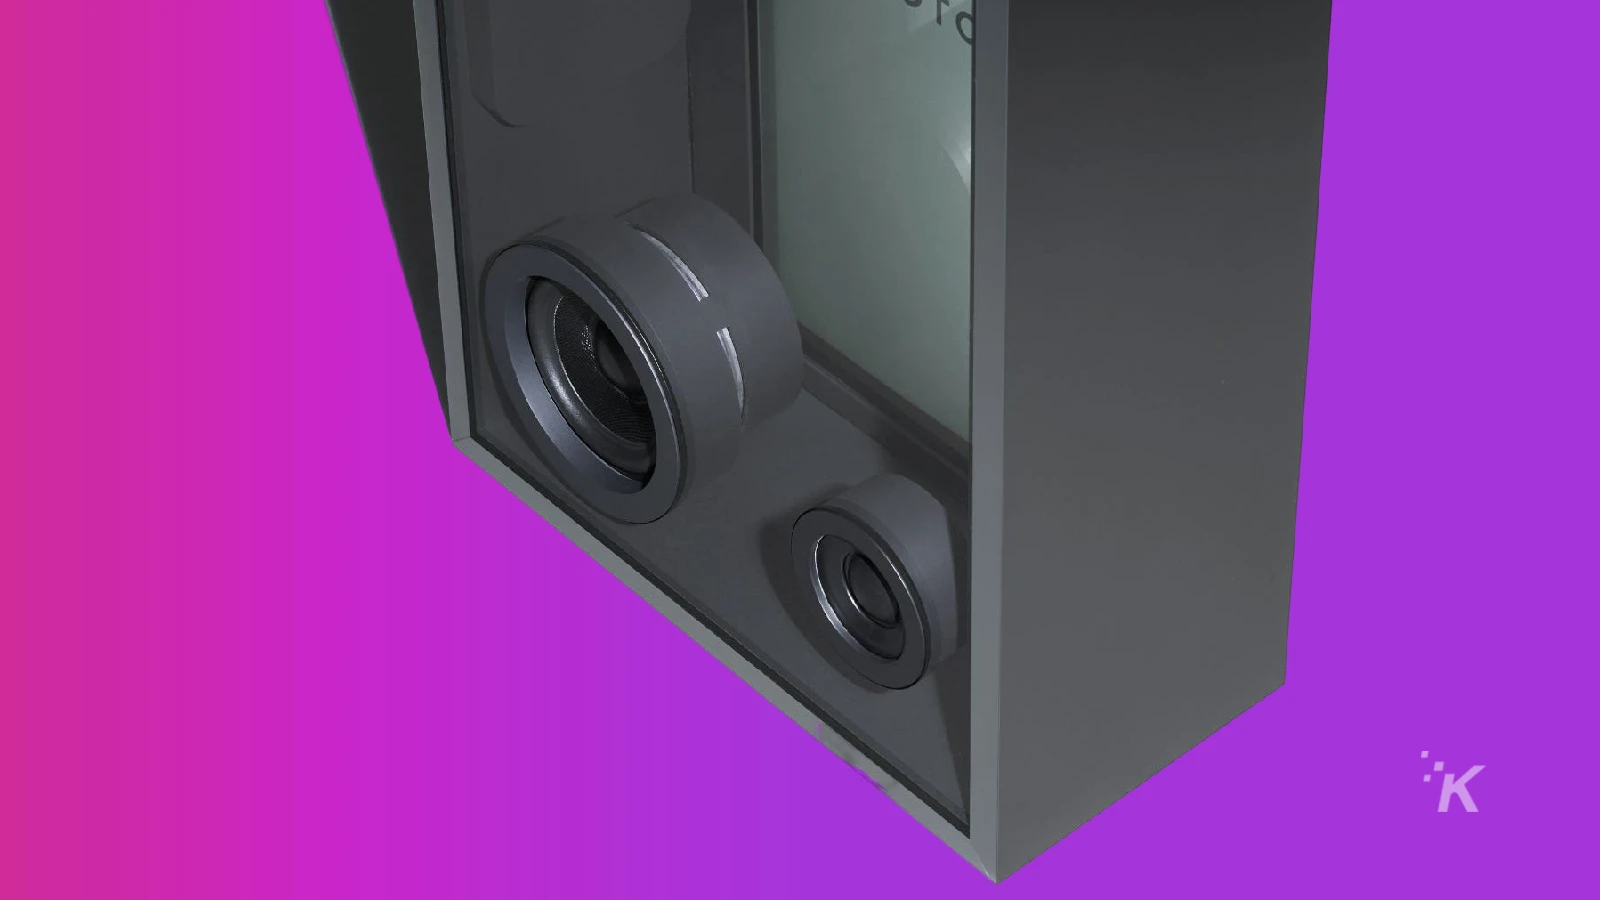 lyric speaker box on a purple background